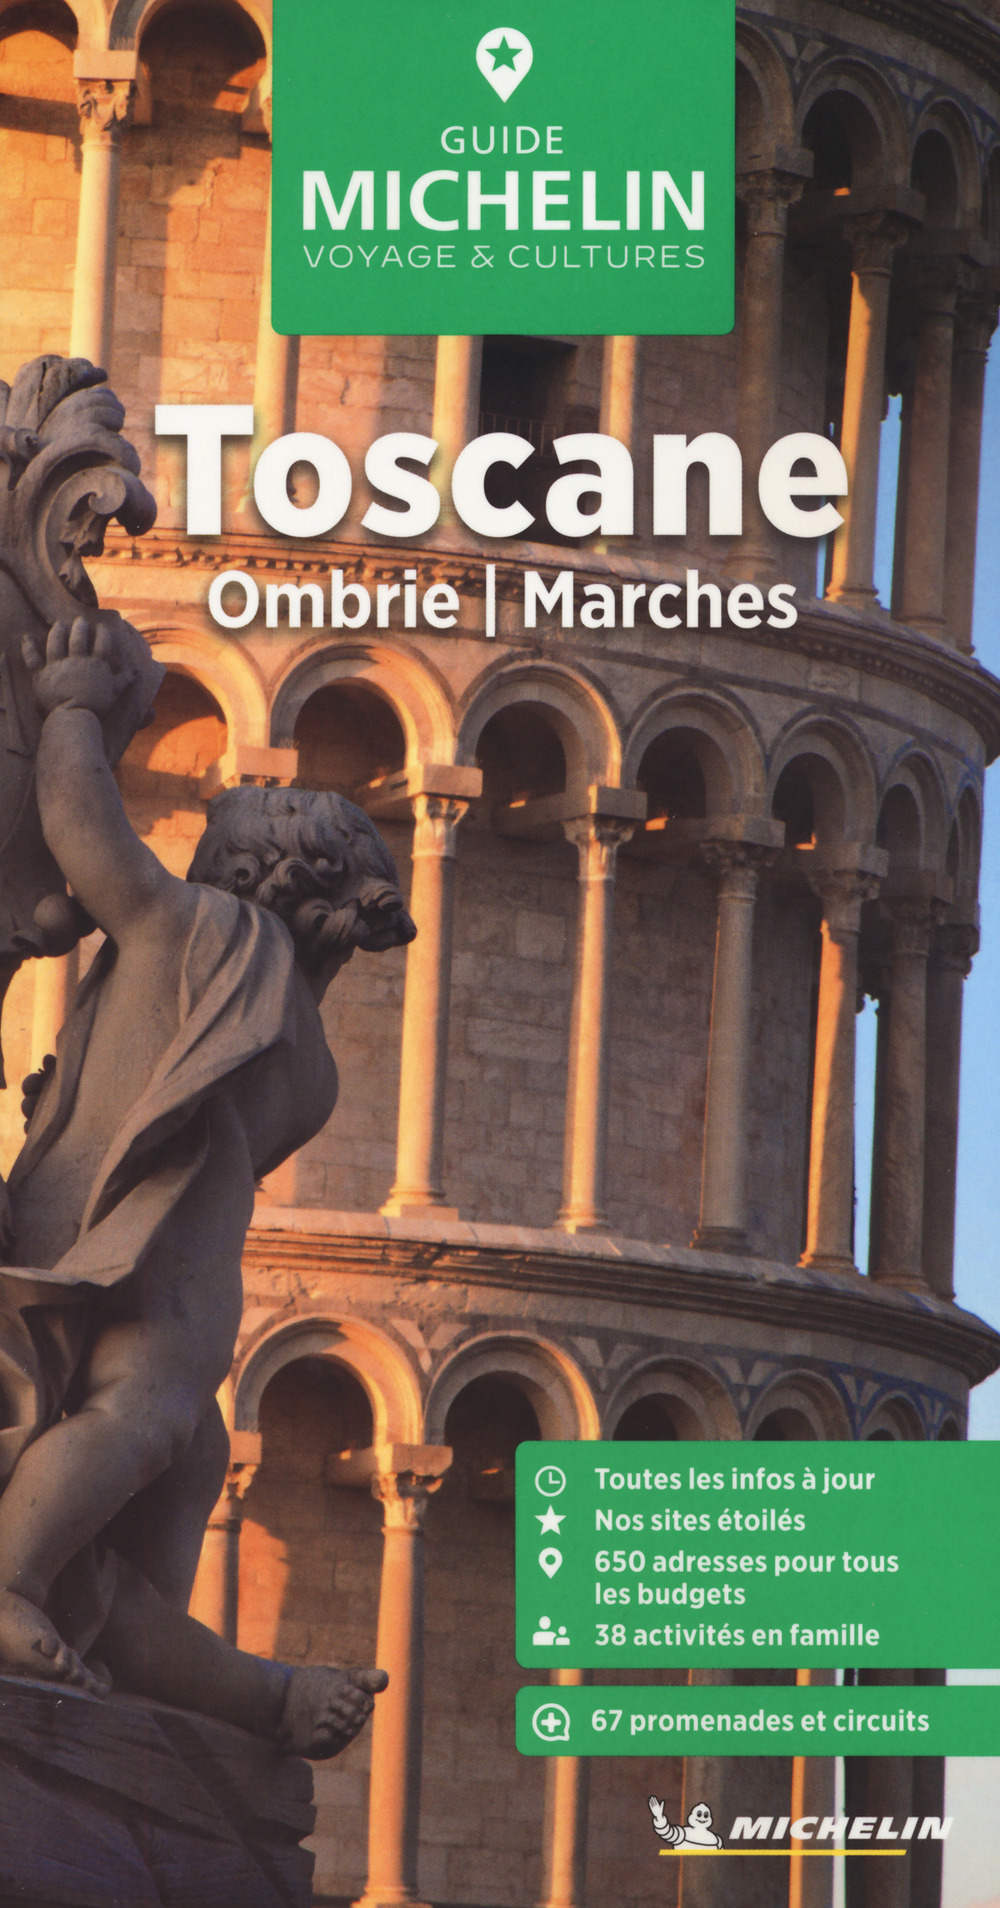 Toscane et Ombrie